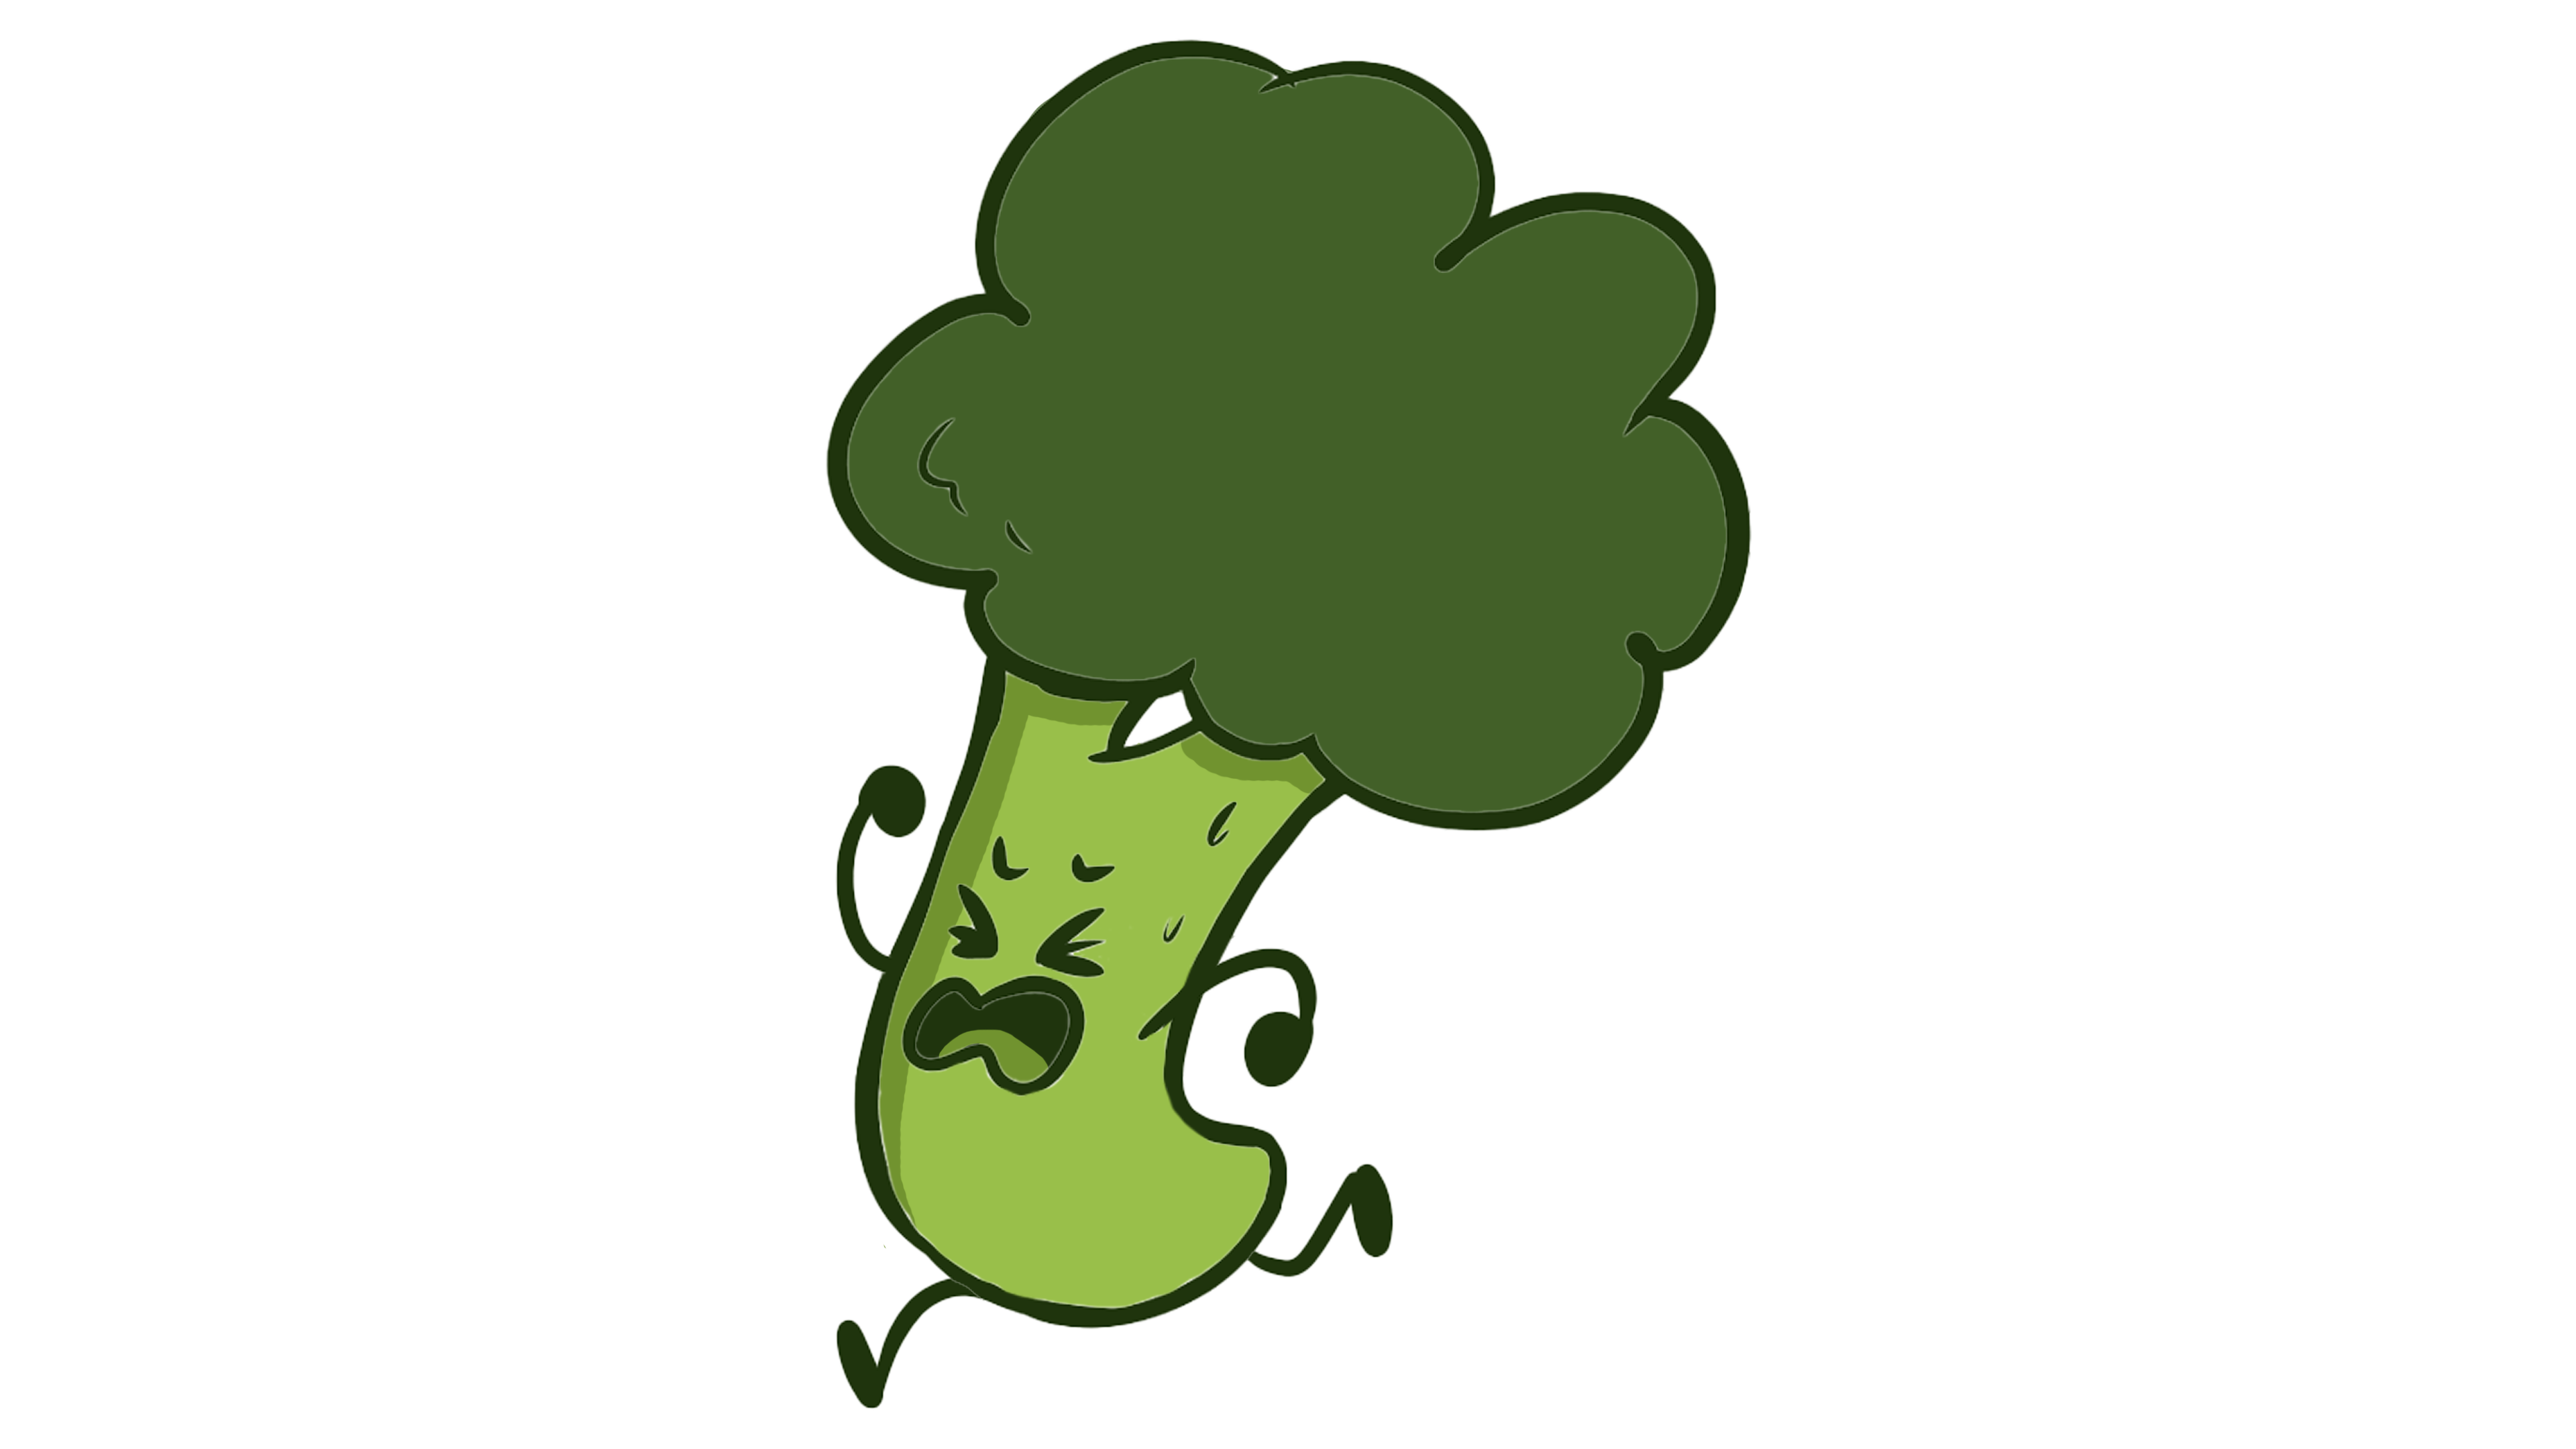 Broccoli character running